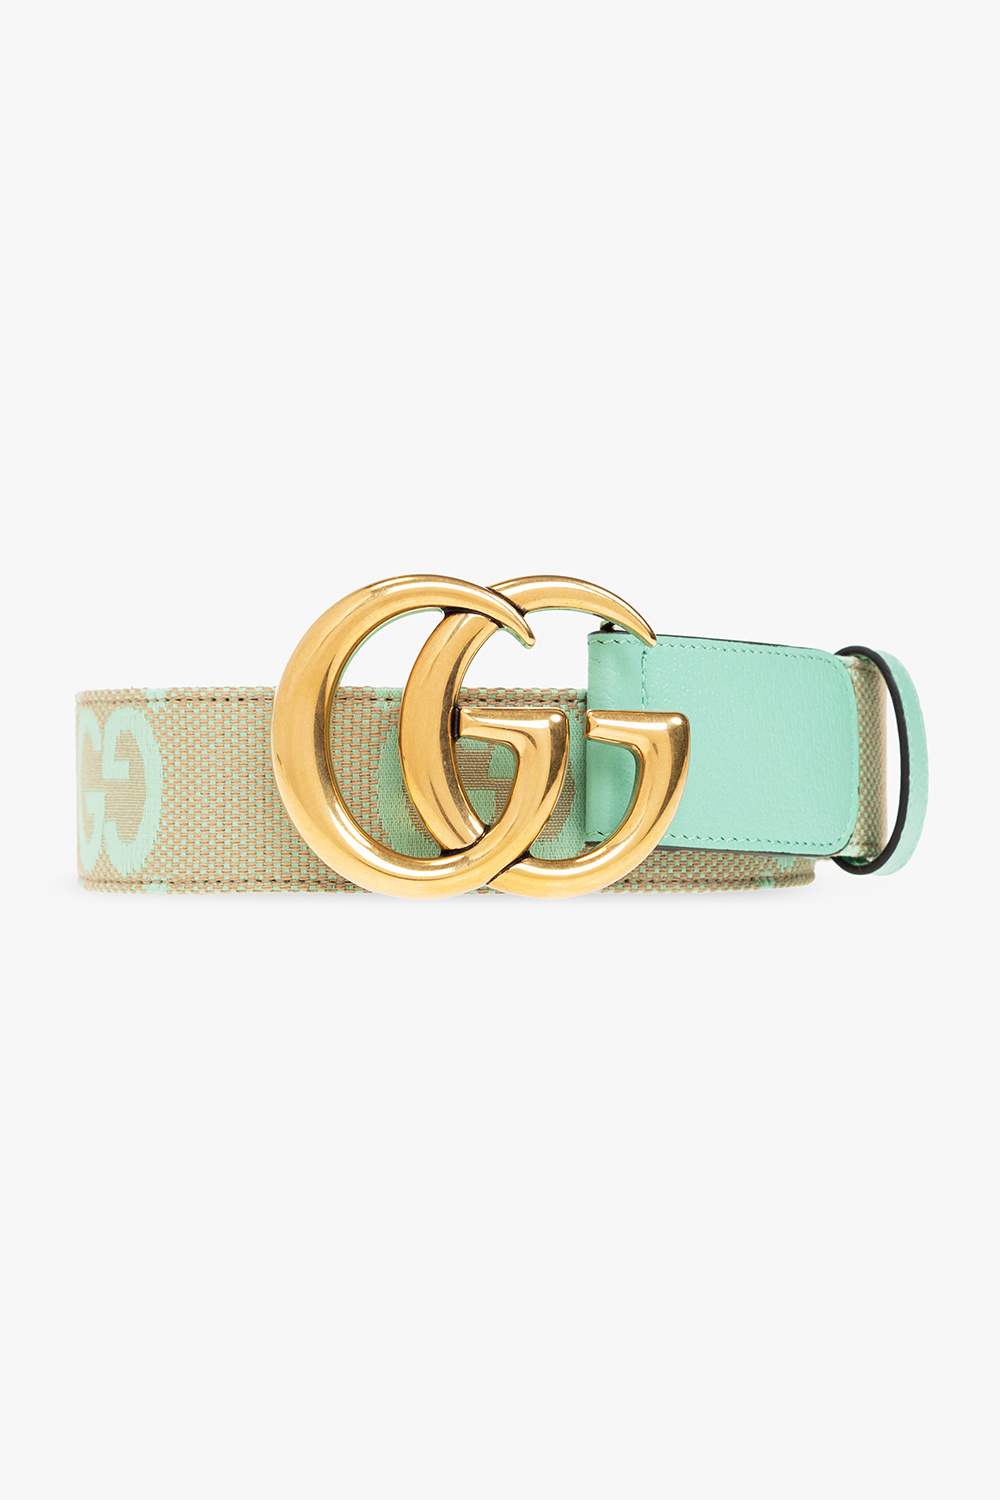 Green Belt with logo Gucci - Vitkac Sweden